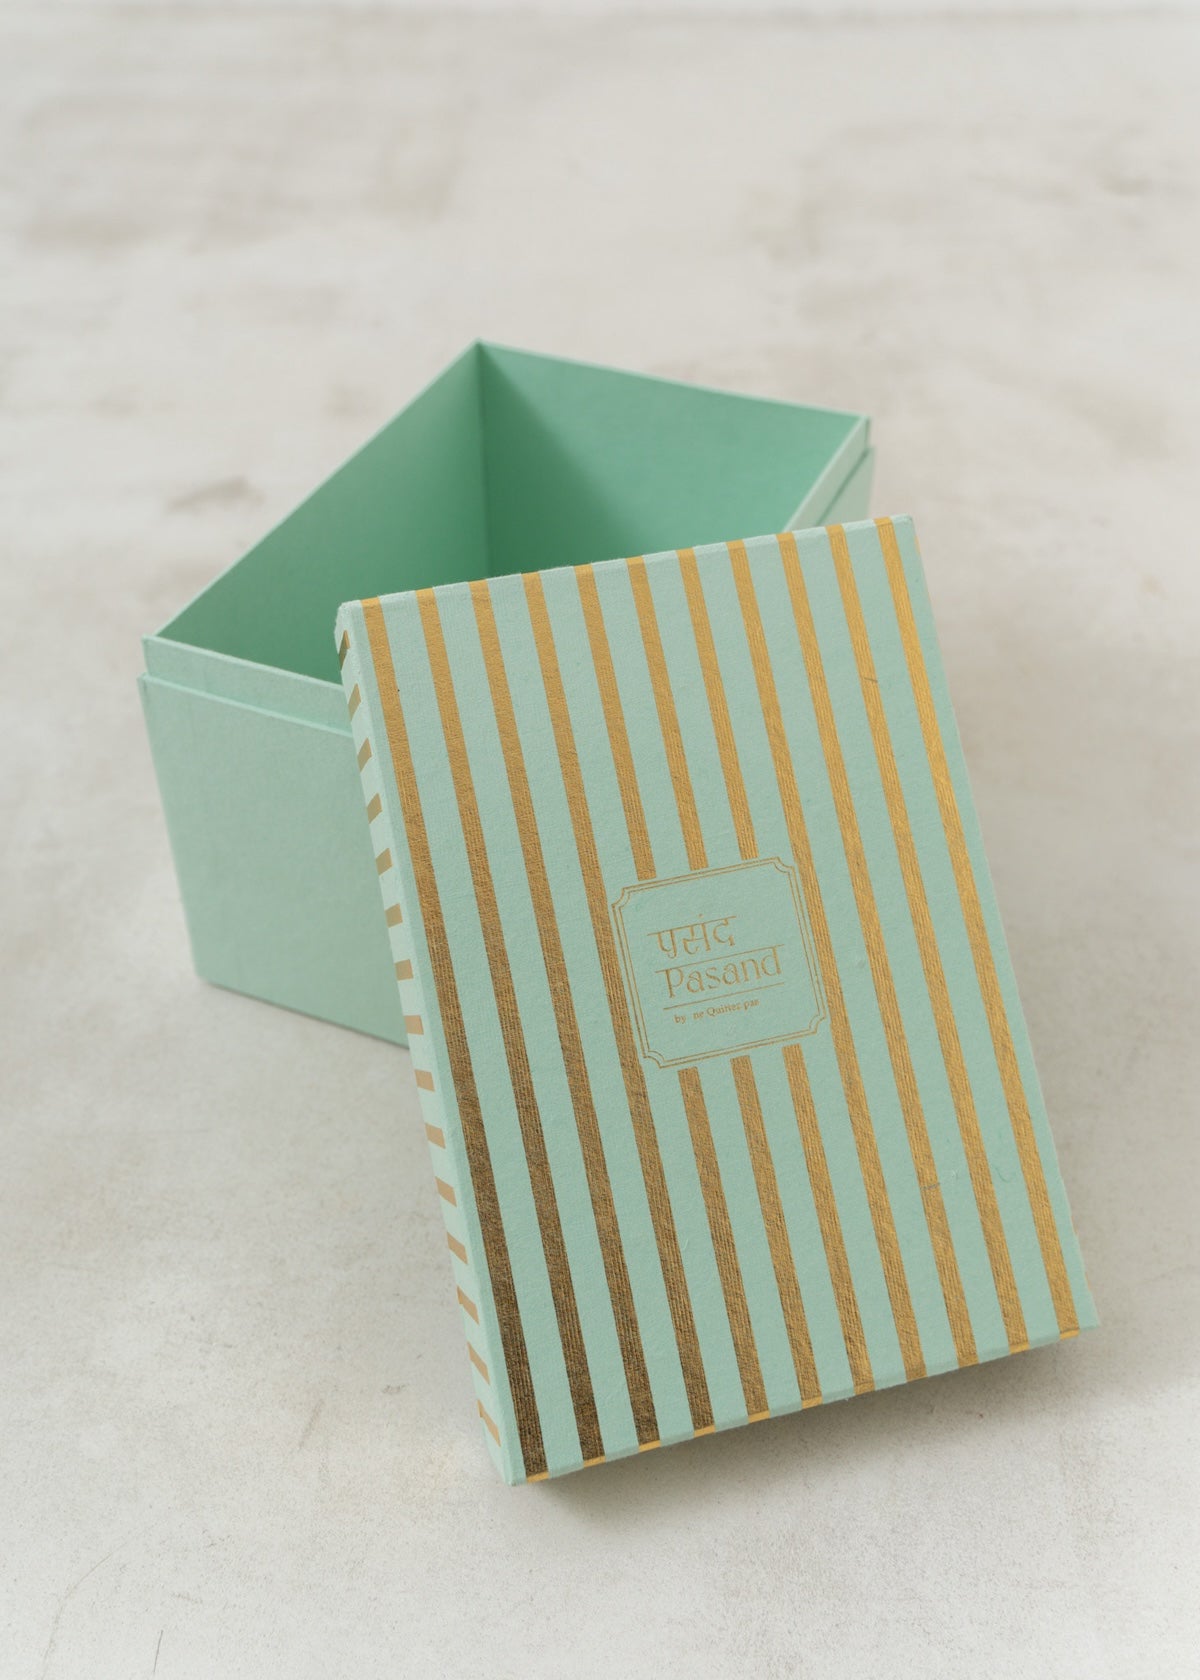 Pasand Original Paper Gift Box Large | Pasand by ne Quittez pas 